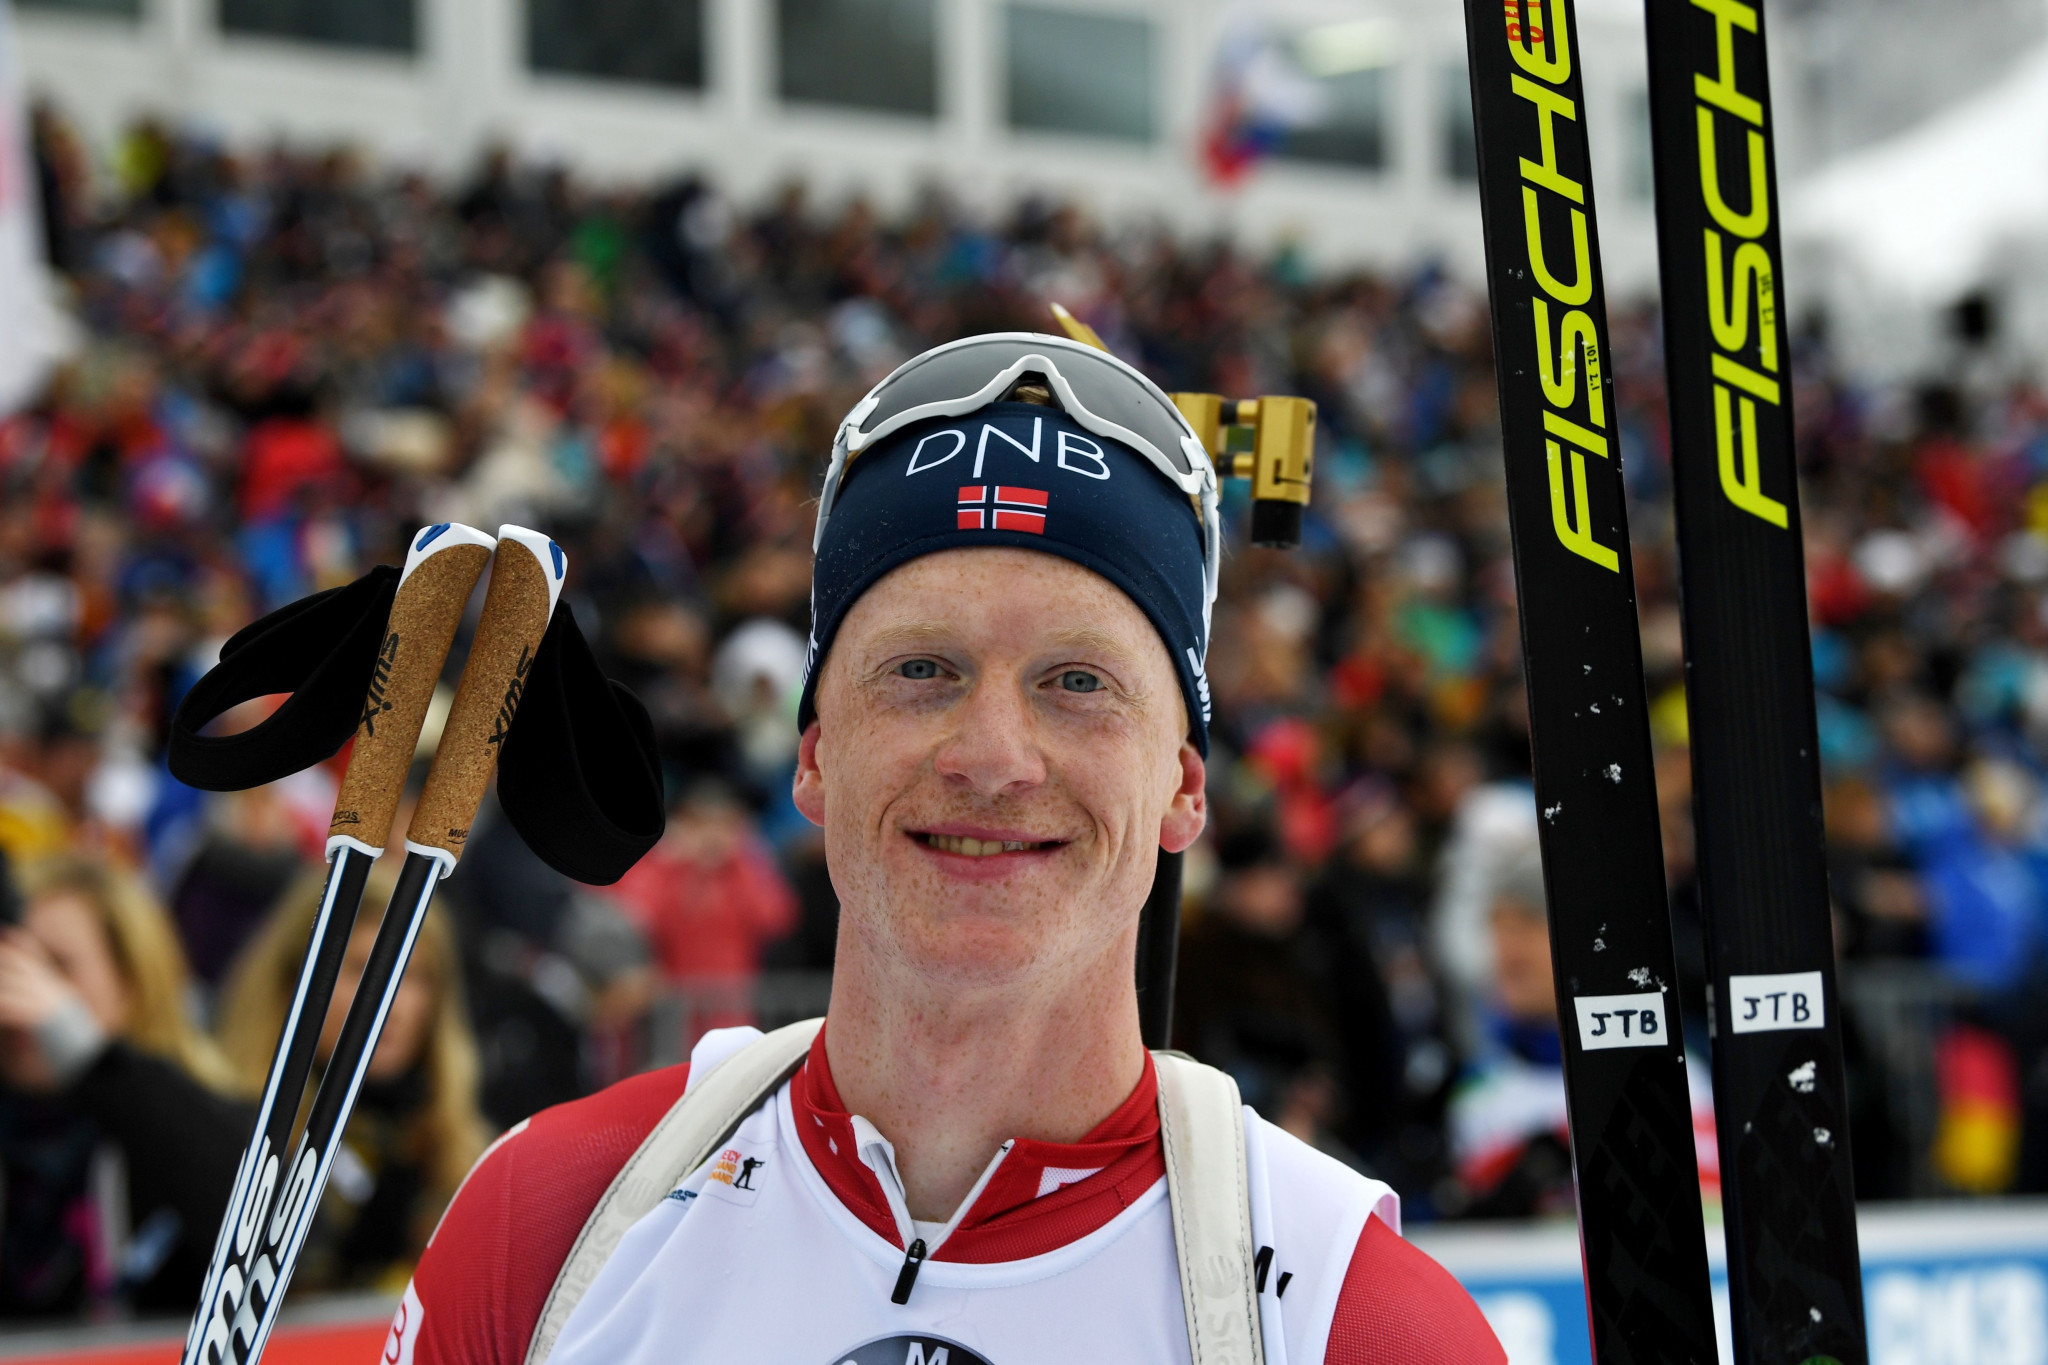 Bø tops men's 10km sprint podium at Biathlon World Cup in France